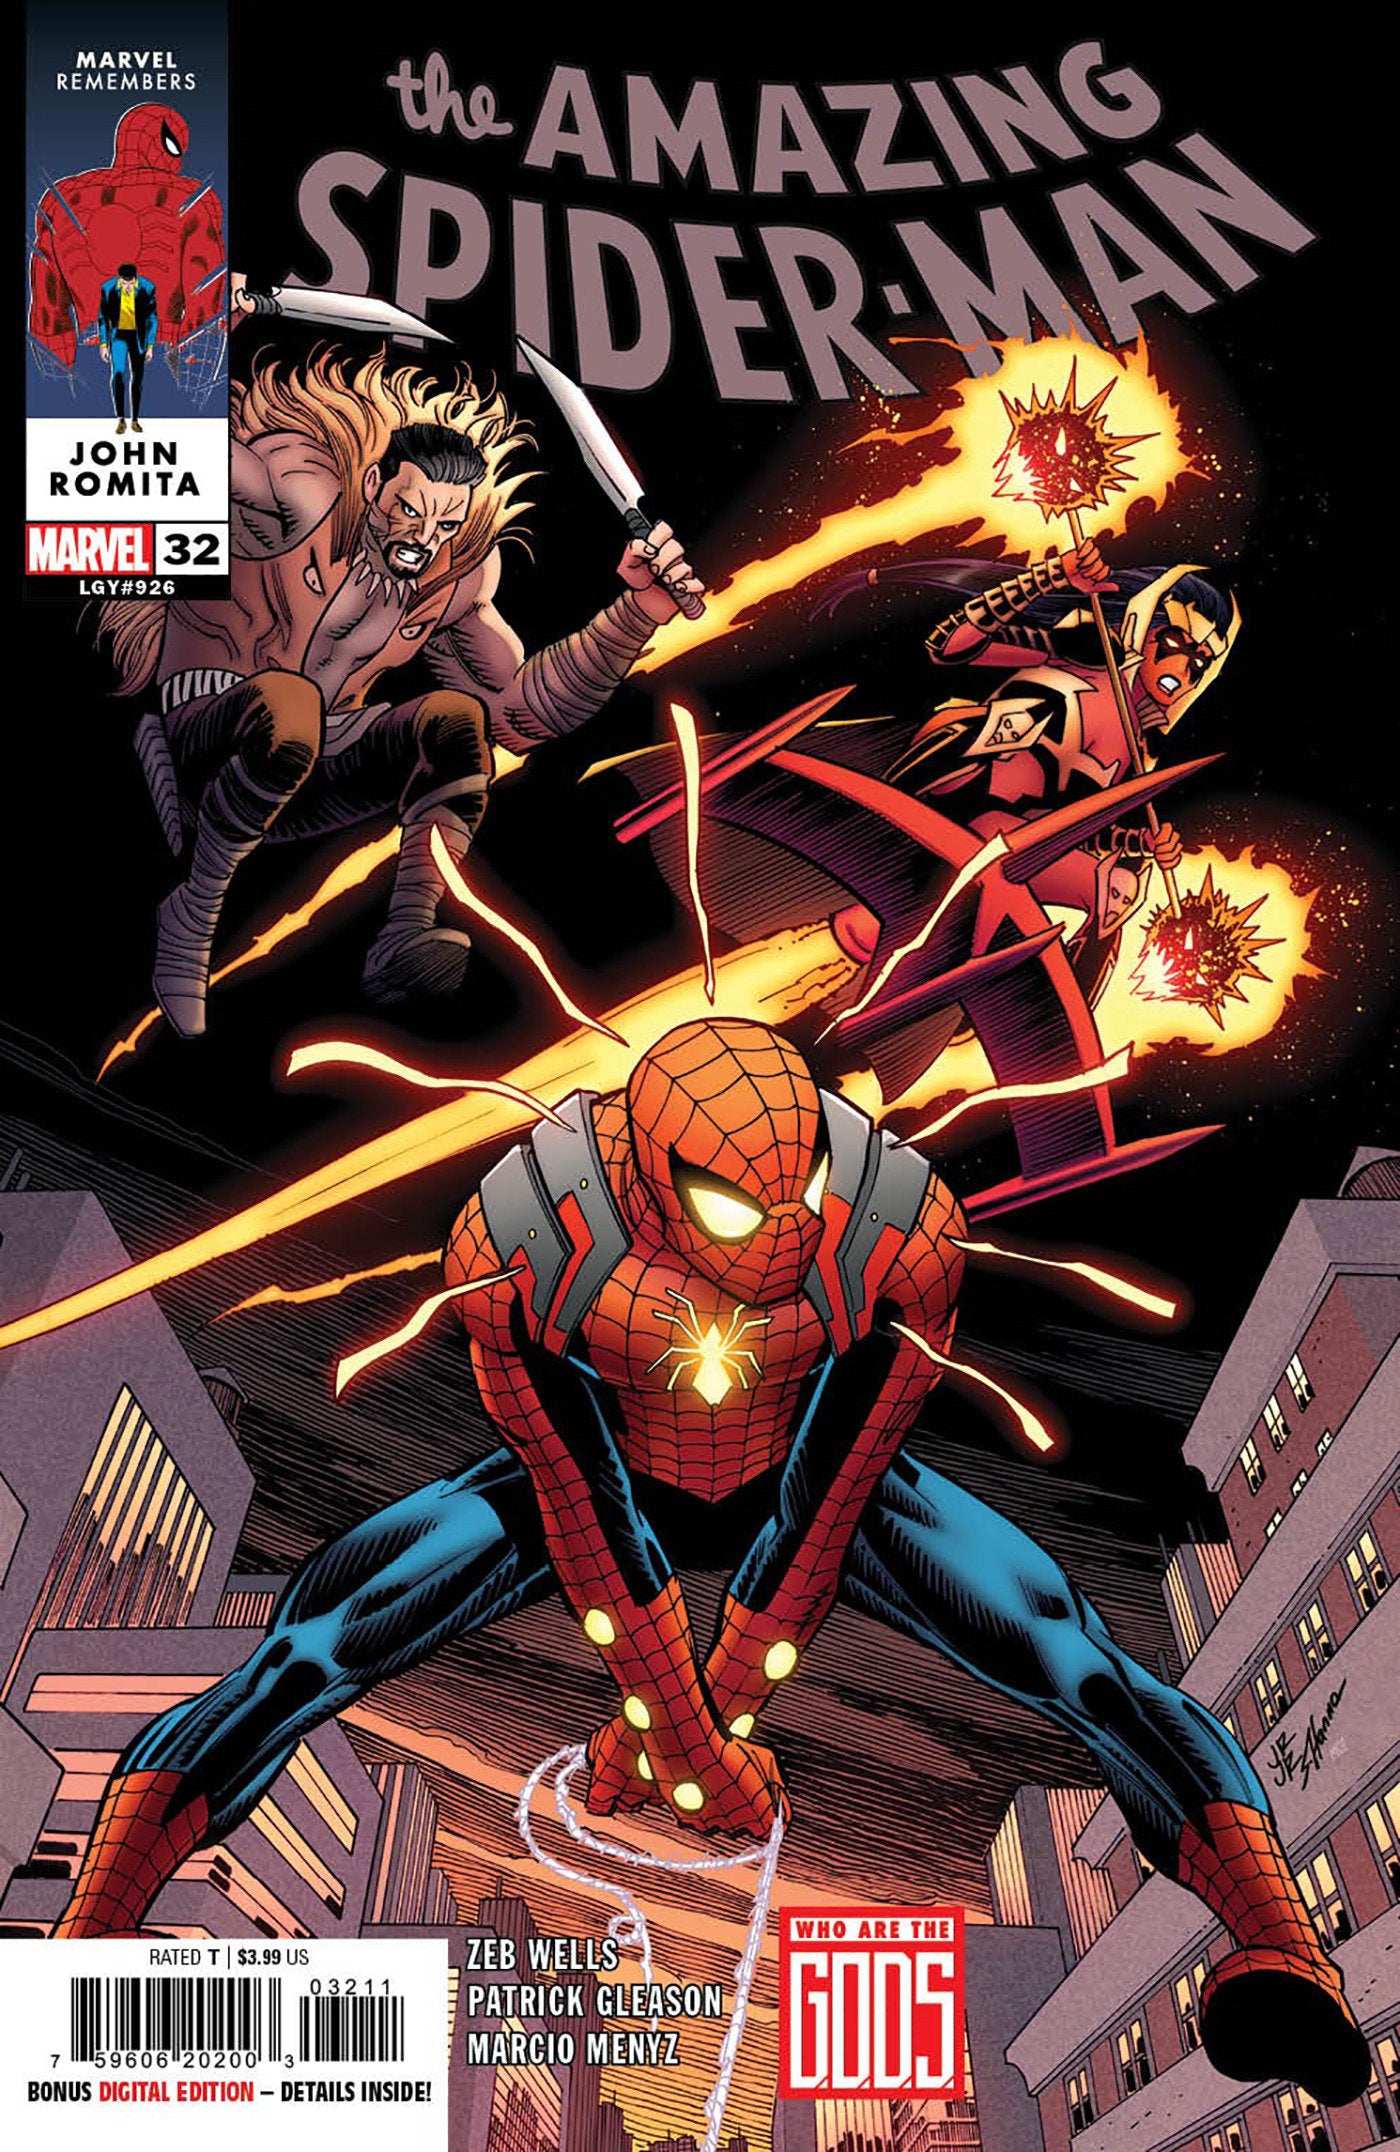 The Amazing Spider-man 1 & 2 – Midia Digital Xbox 360